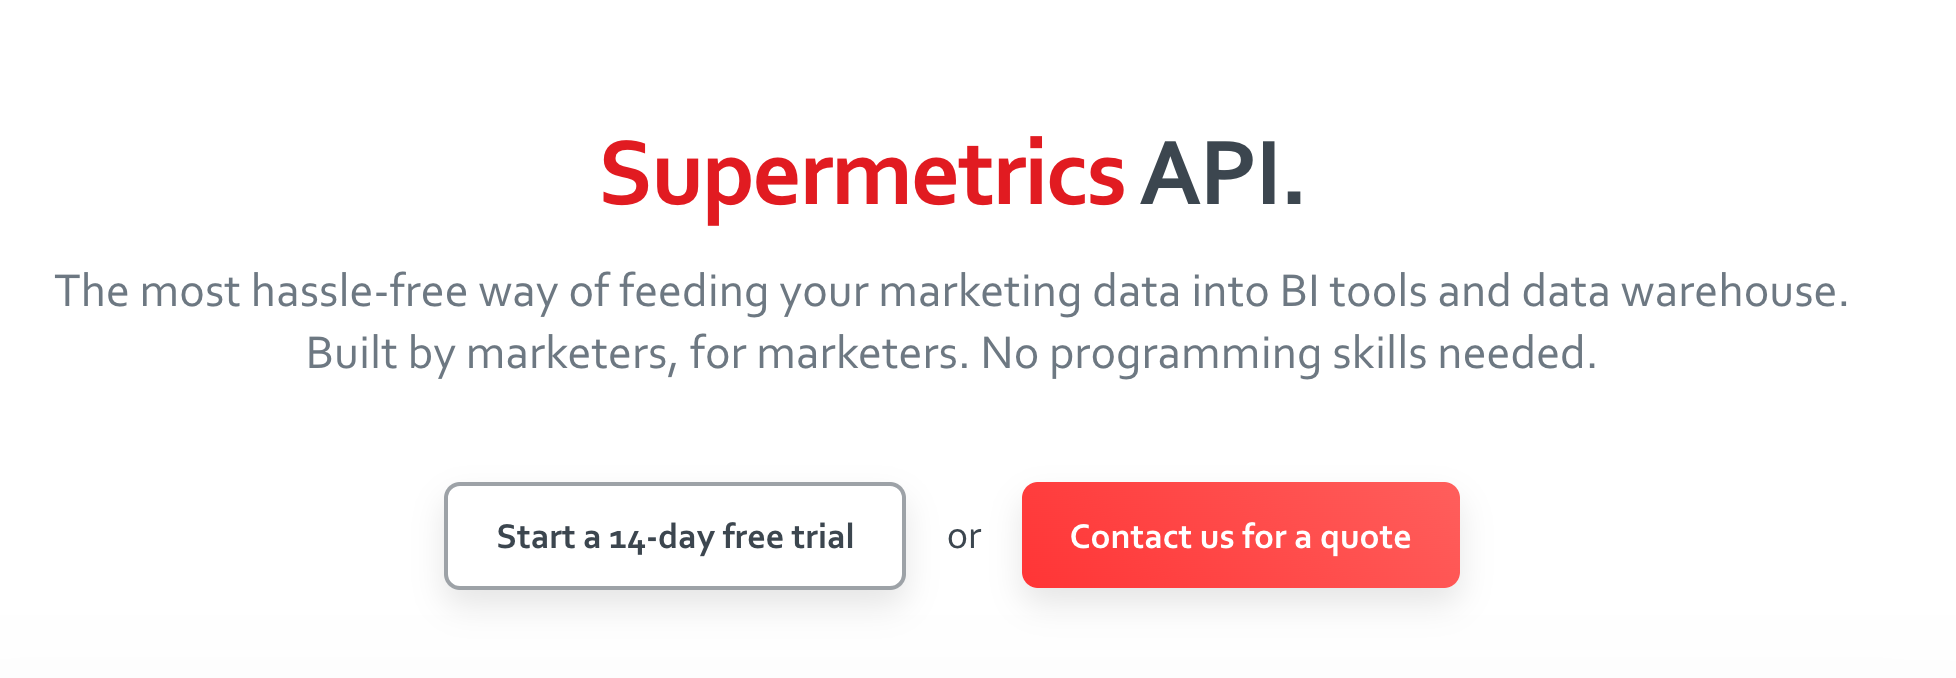 API Supermetrics